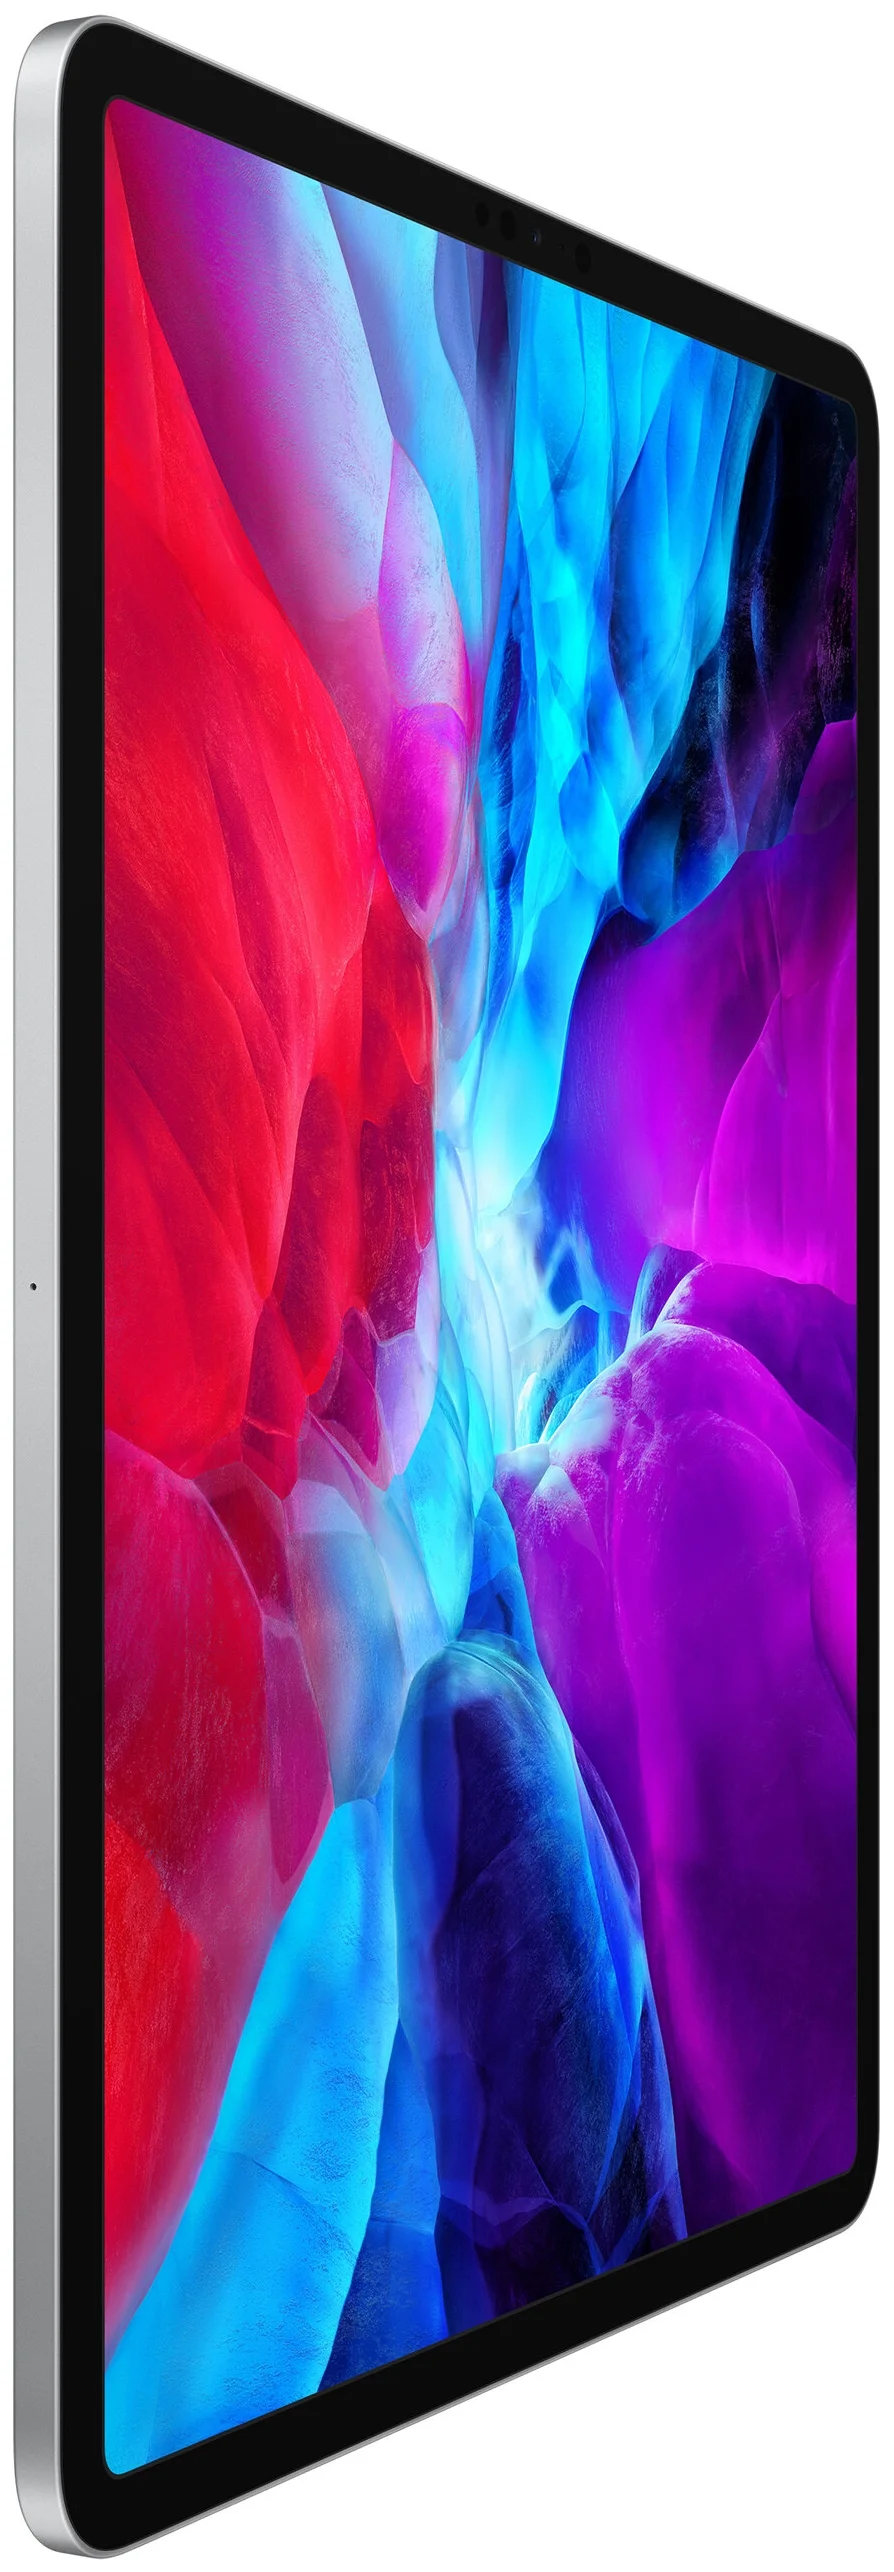 Apple iPad Pro 12.9 (2020) 128Gb Wi-Fi - встроенная память: 128 ГБ